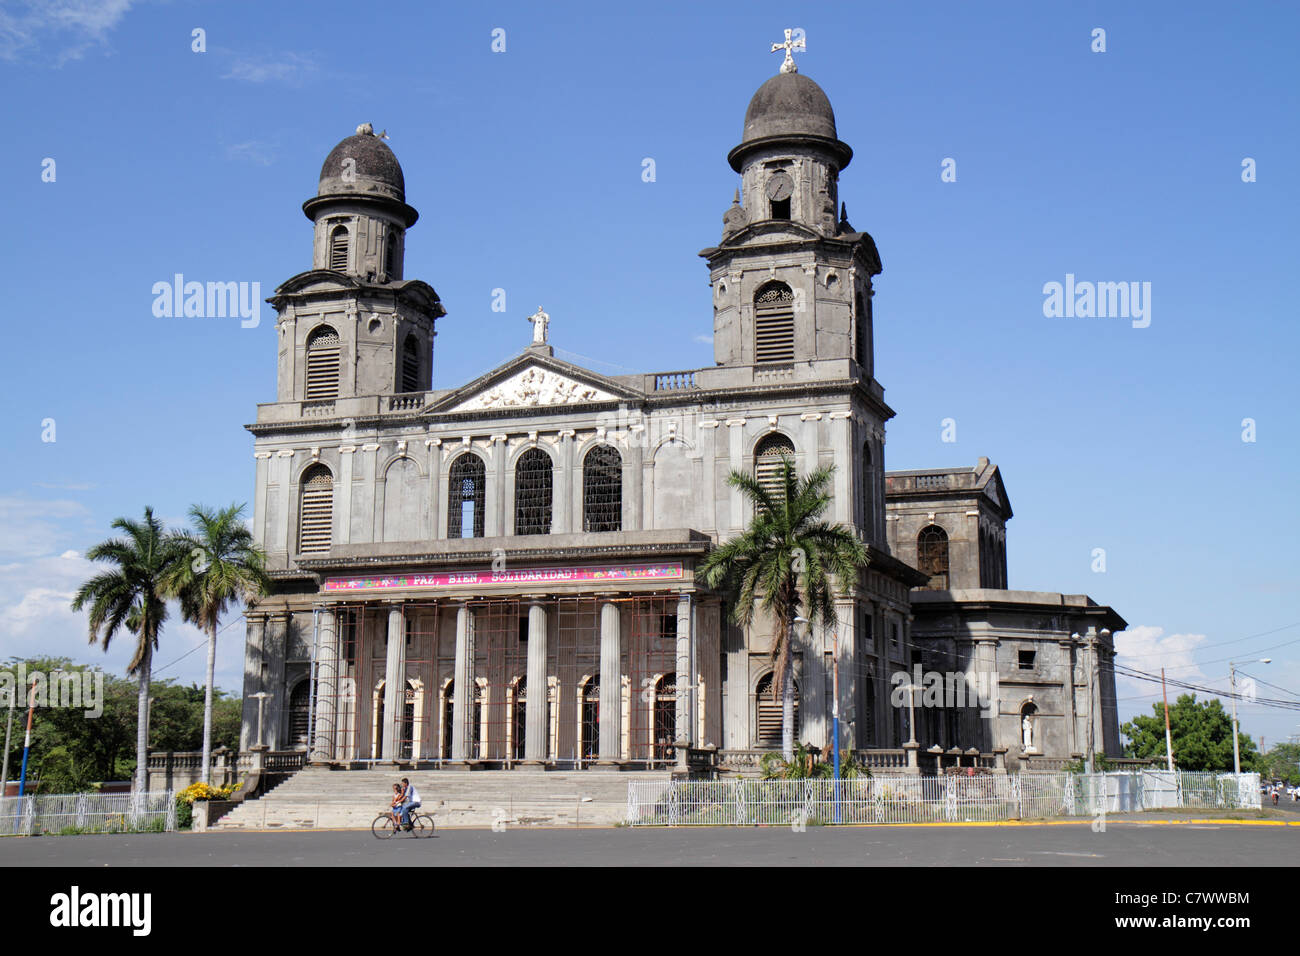 Managua Nicaragua,Santiago of Managua Cathedral Catholic,church,religion,ruin,earthquake damage,tower,dome,cross,facade,fence,plaza,bicycle,bicycling, Stock Photo